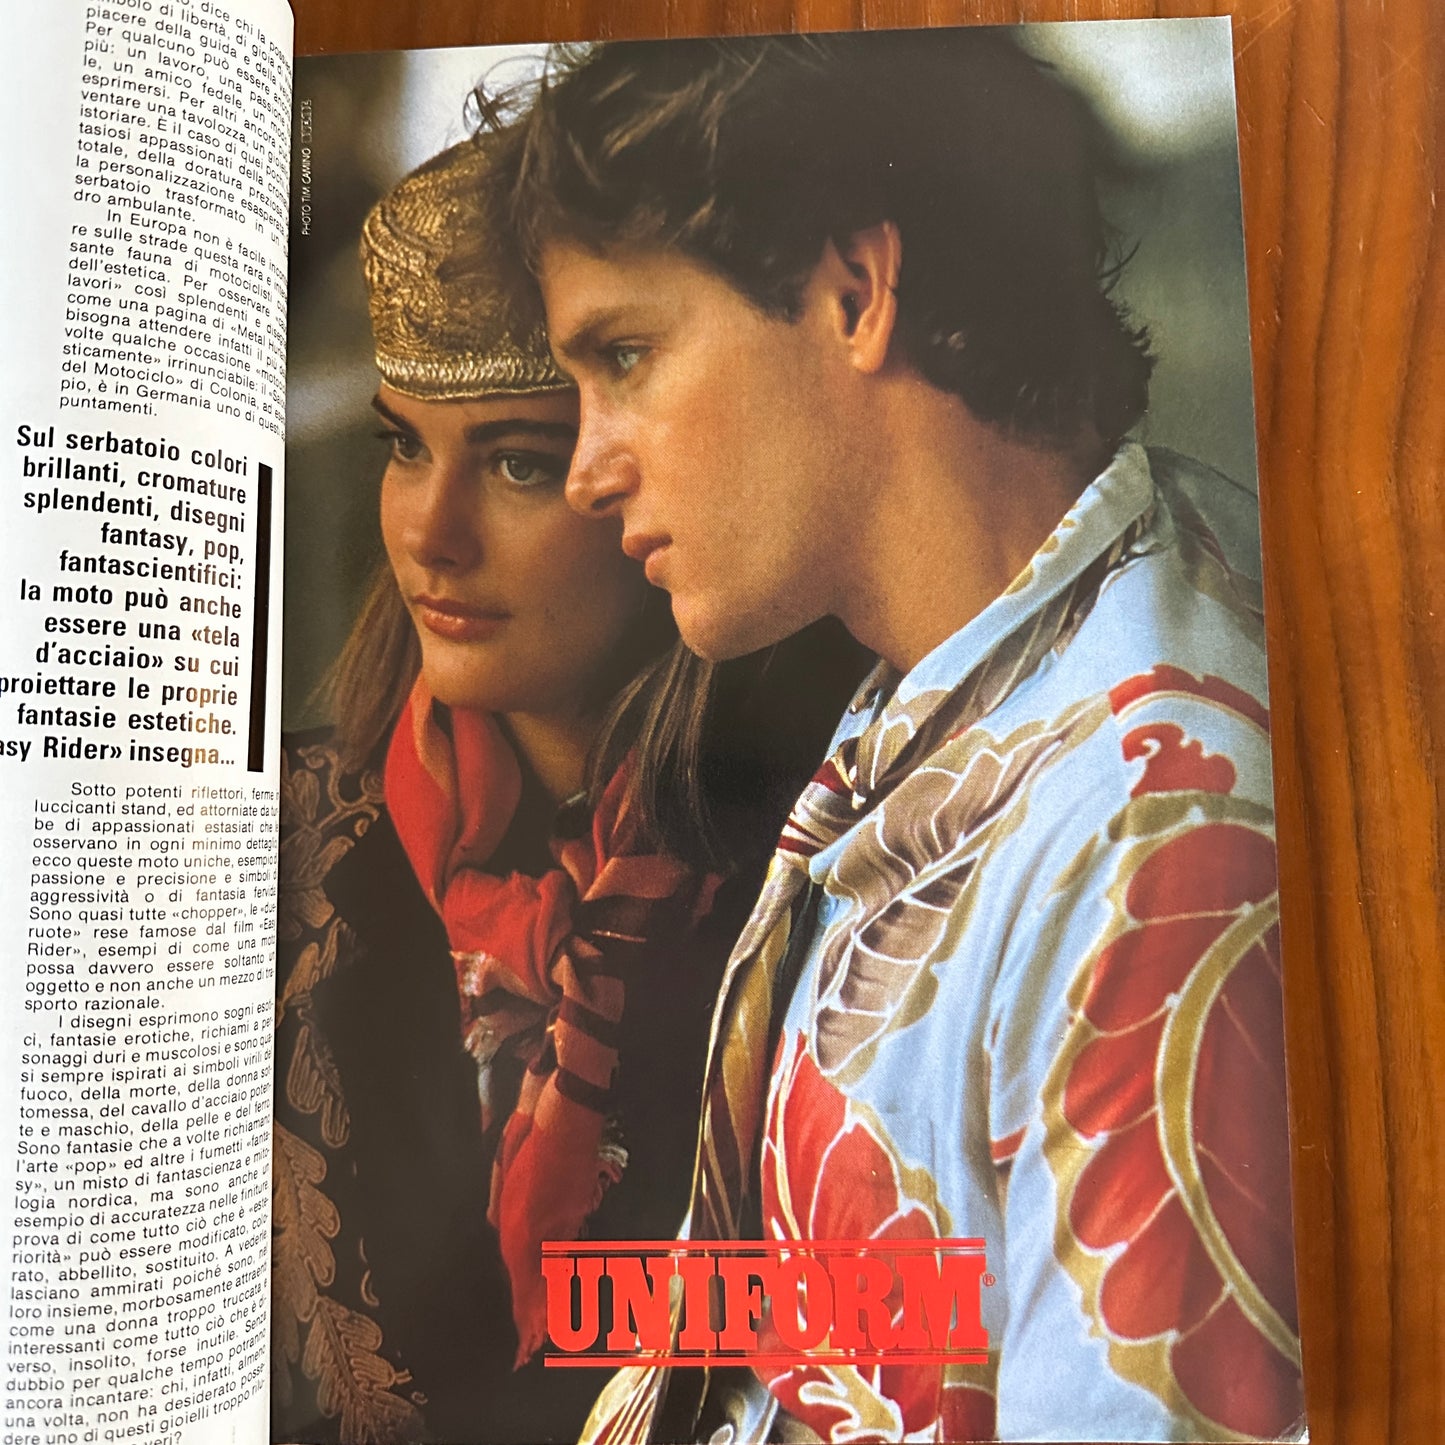 Per Lui Magazine - Italy - Gennaio 1984